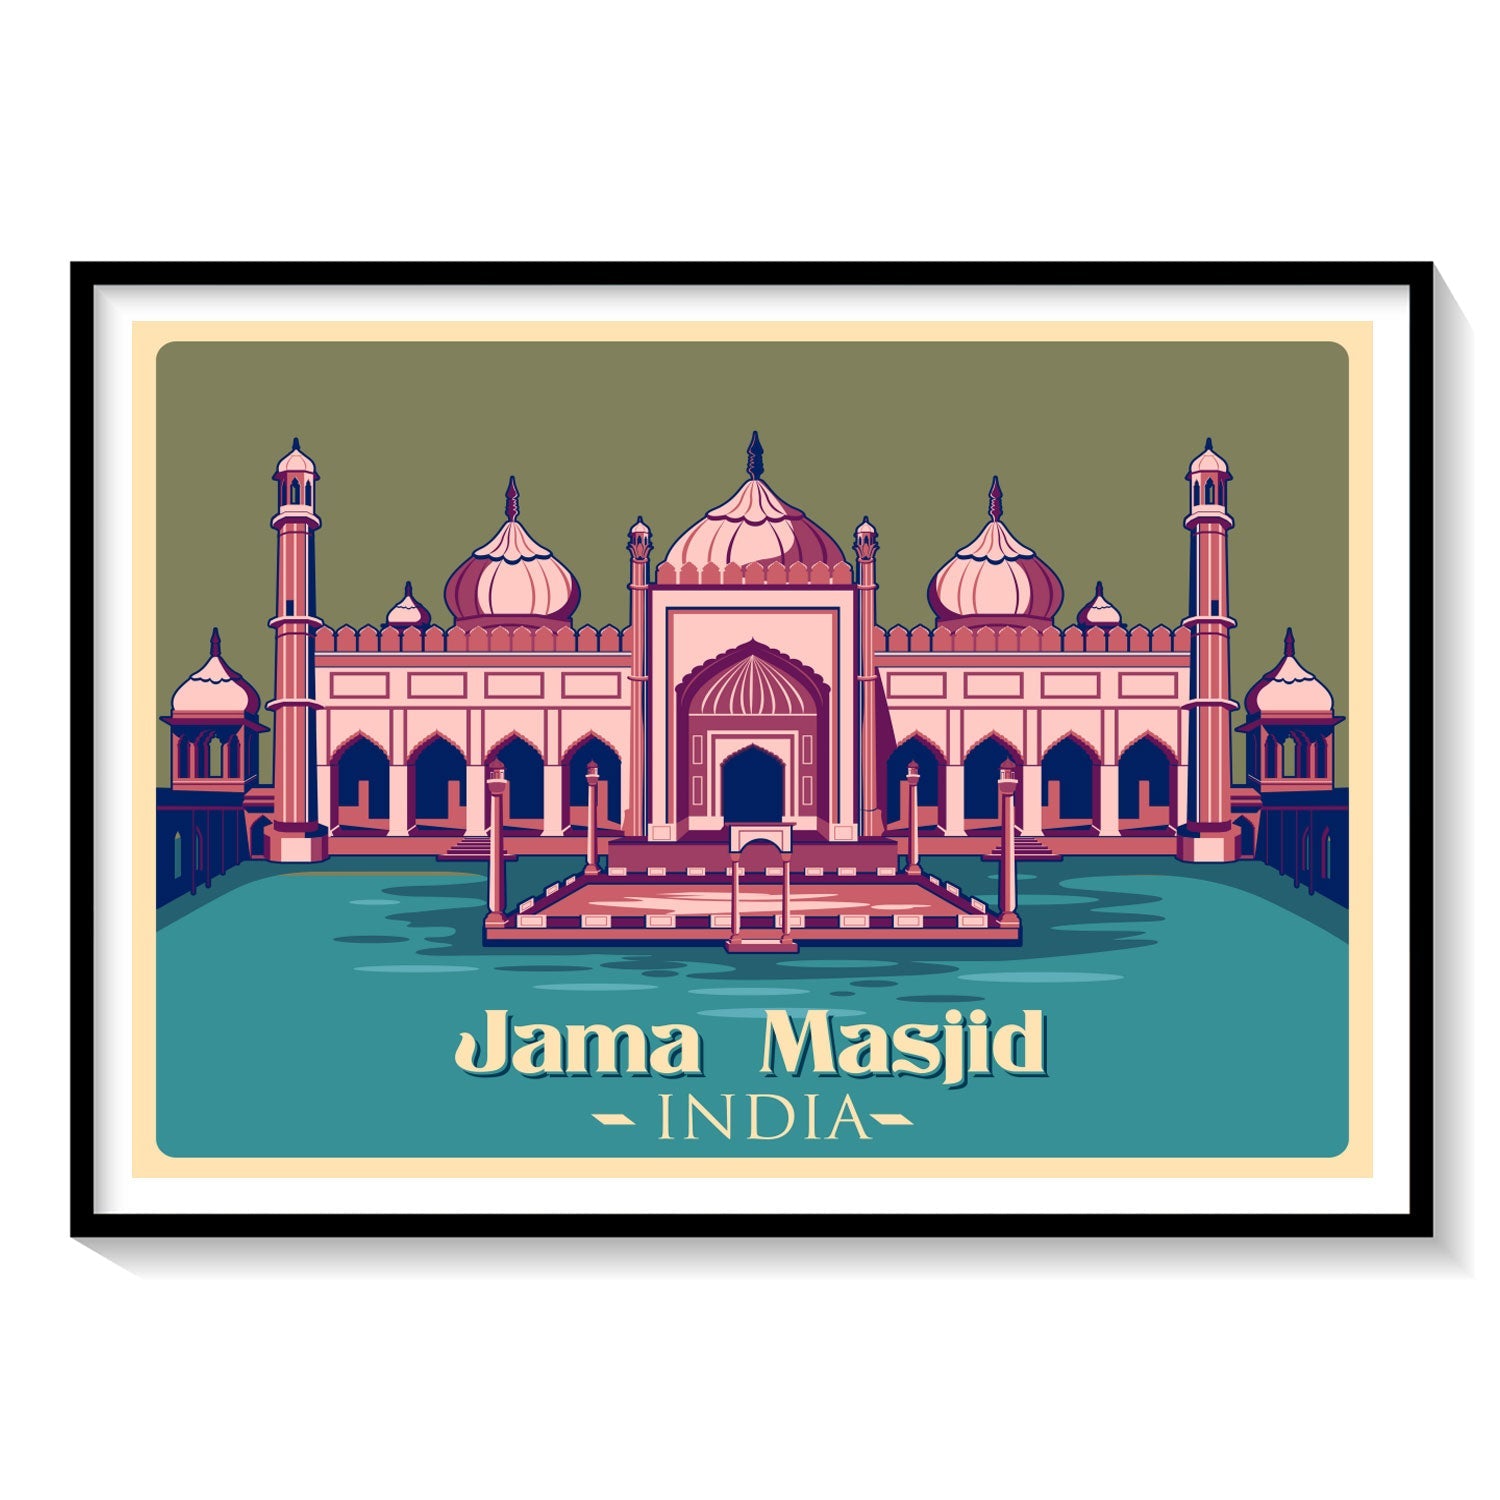 Jama masjid blue landmark creative background Vector Image